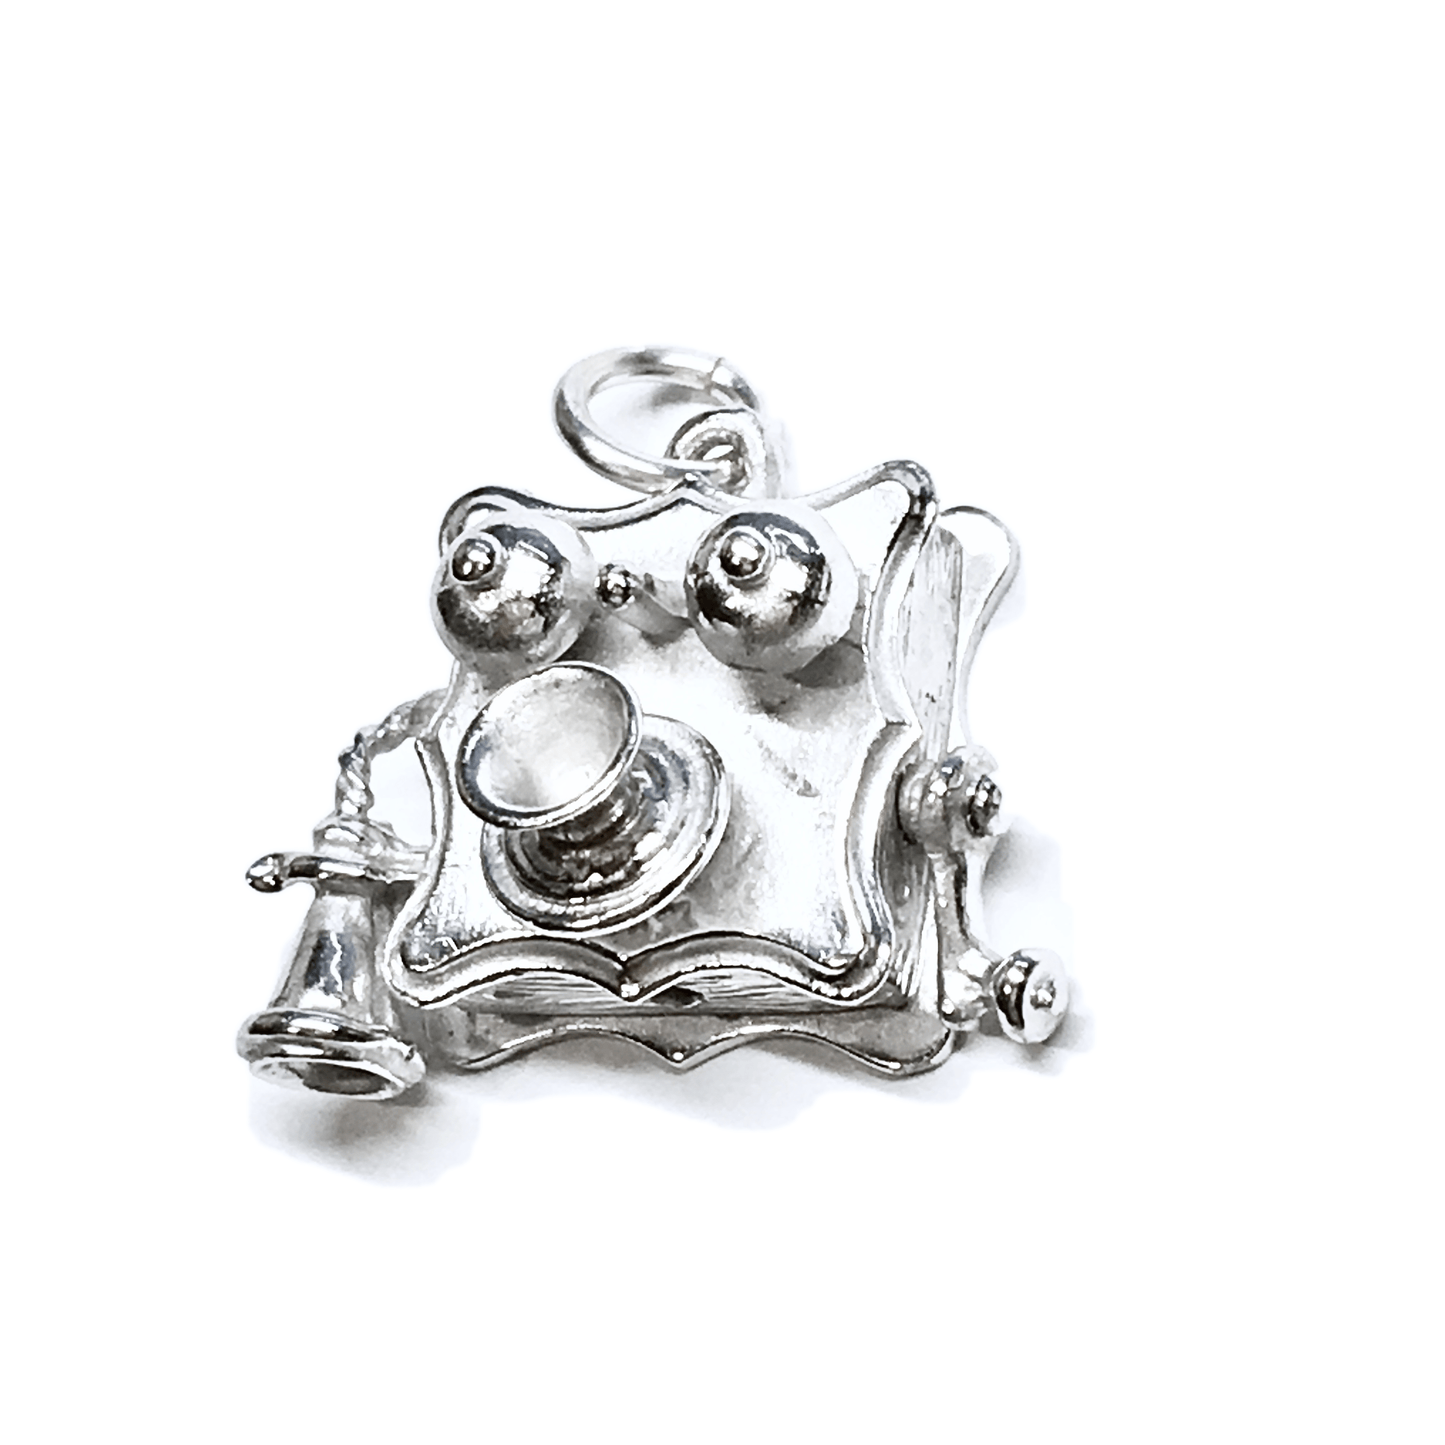 3D Charm - Vintage Sterling Silver Hand Crank Phone Bracelet Charm - Mens Womens Pendant - Discount Estate Jewelry